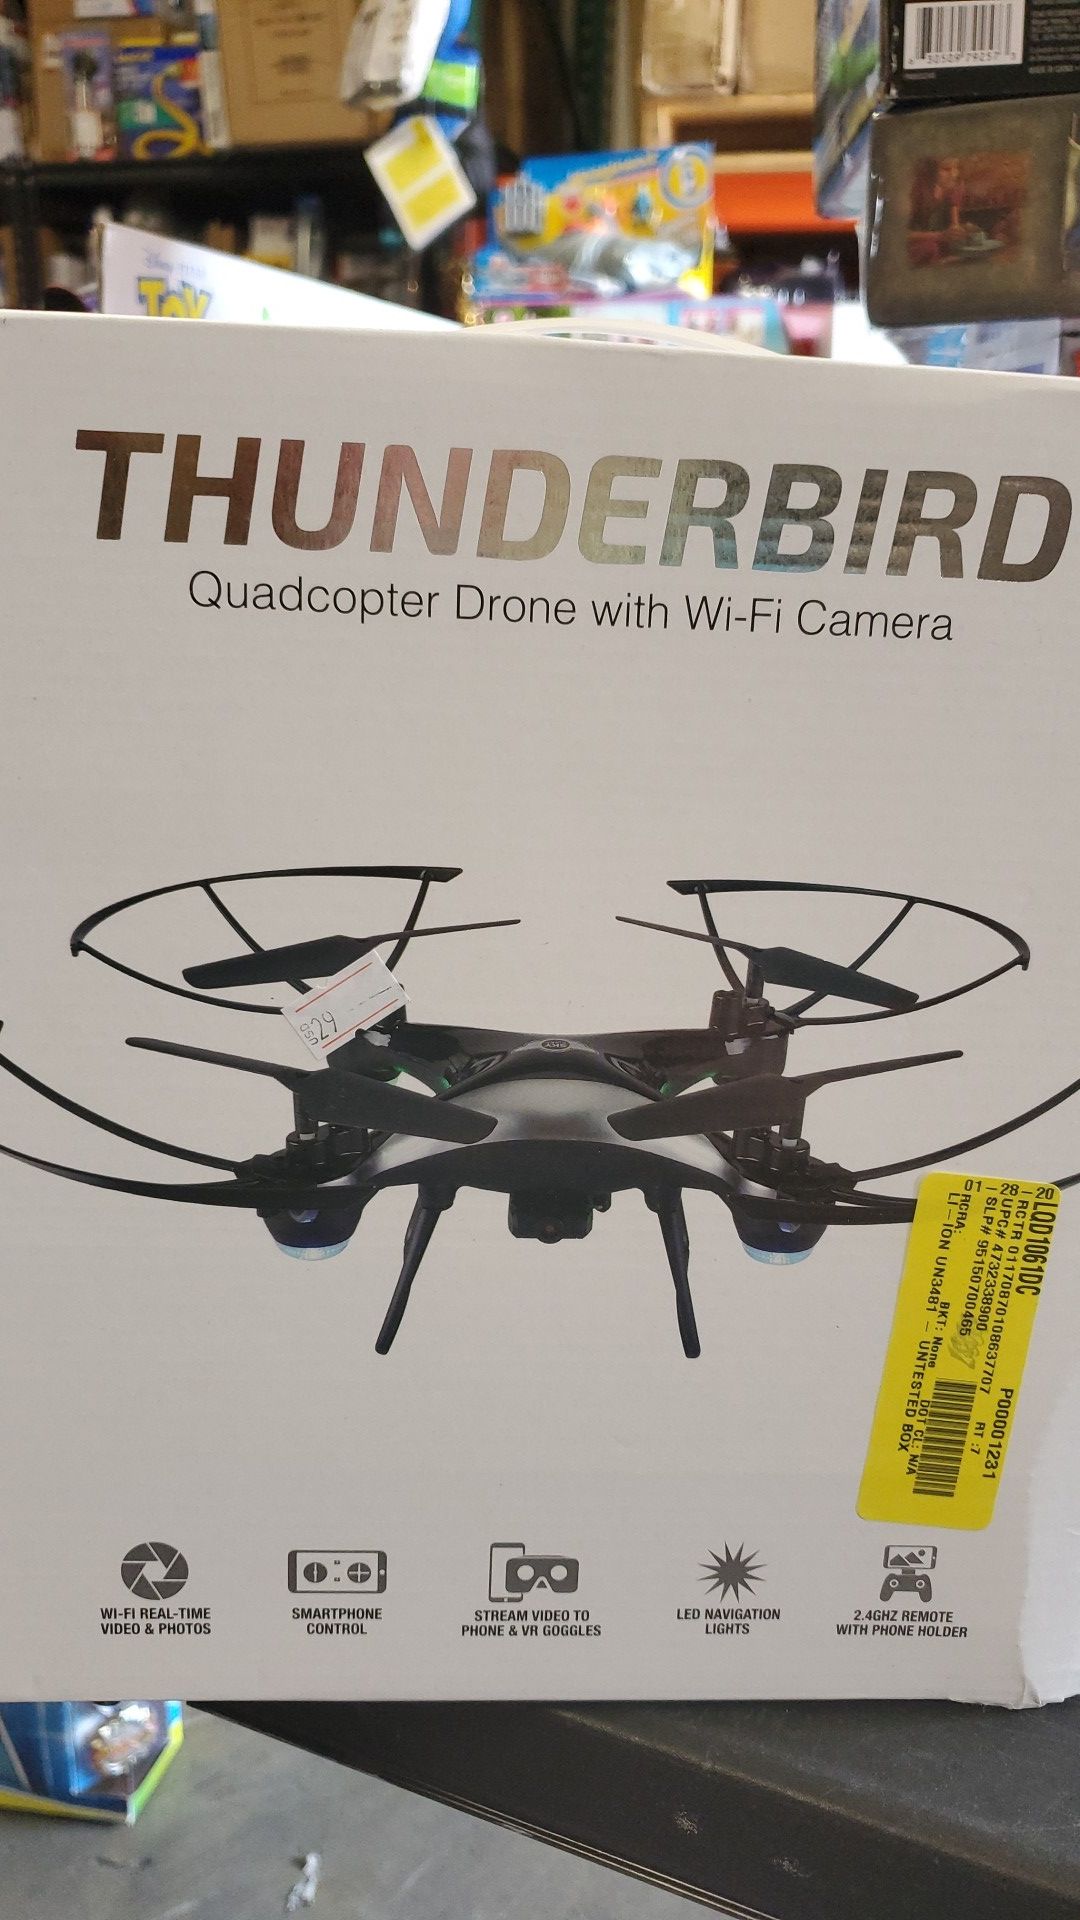 Thunderbird quadcopter drone with Wi-Fi camera